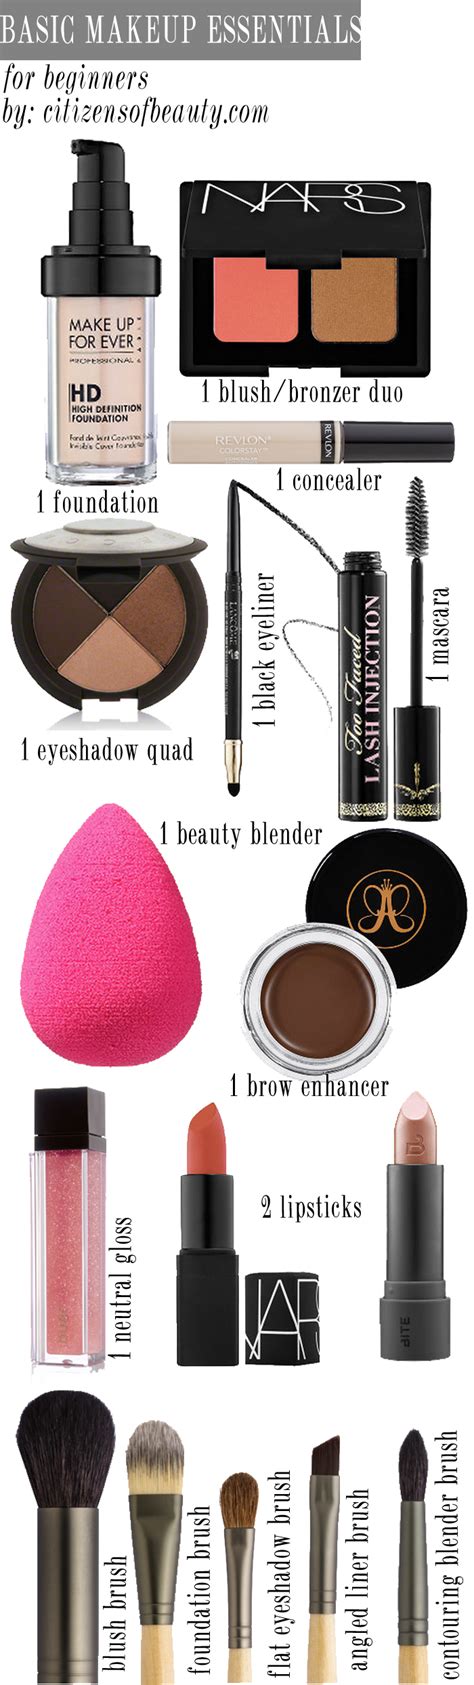 Basic Makeup Essentials For Beginners Citizens Of Beauty